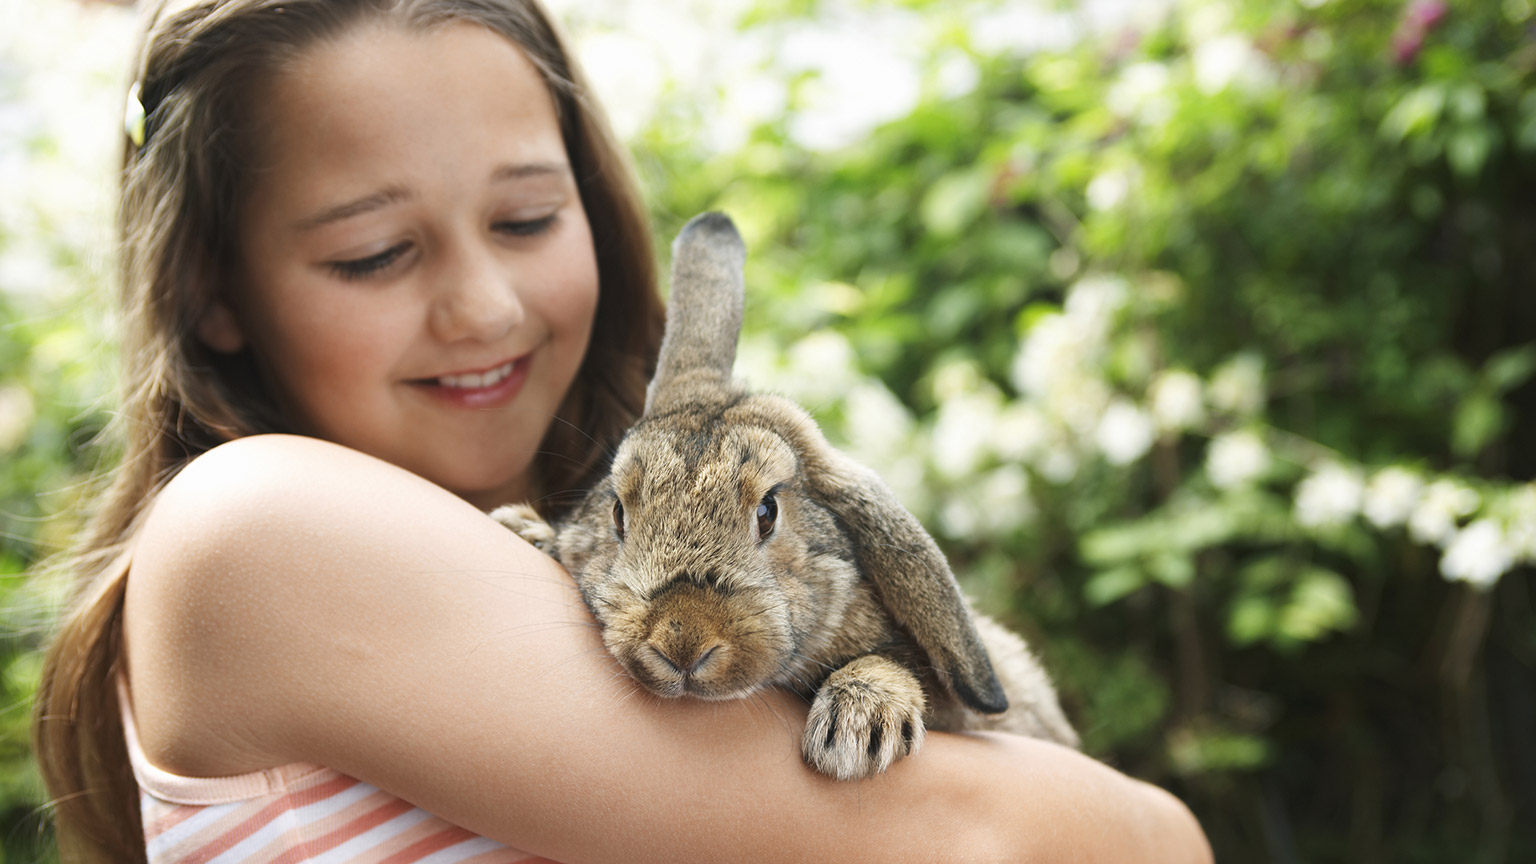 A child holding a pet rabbit